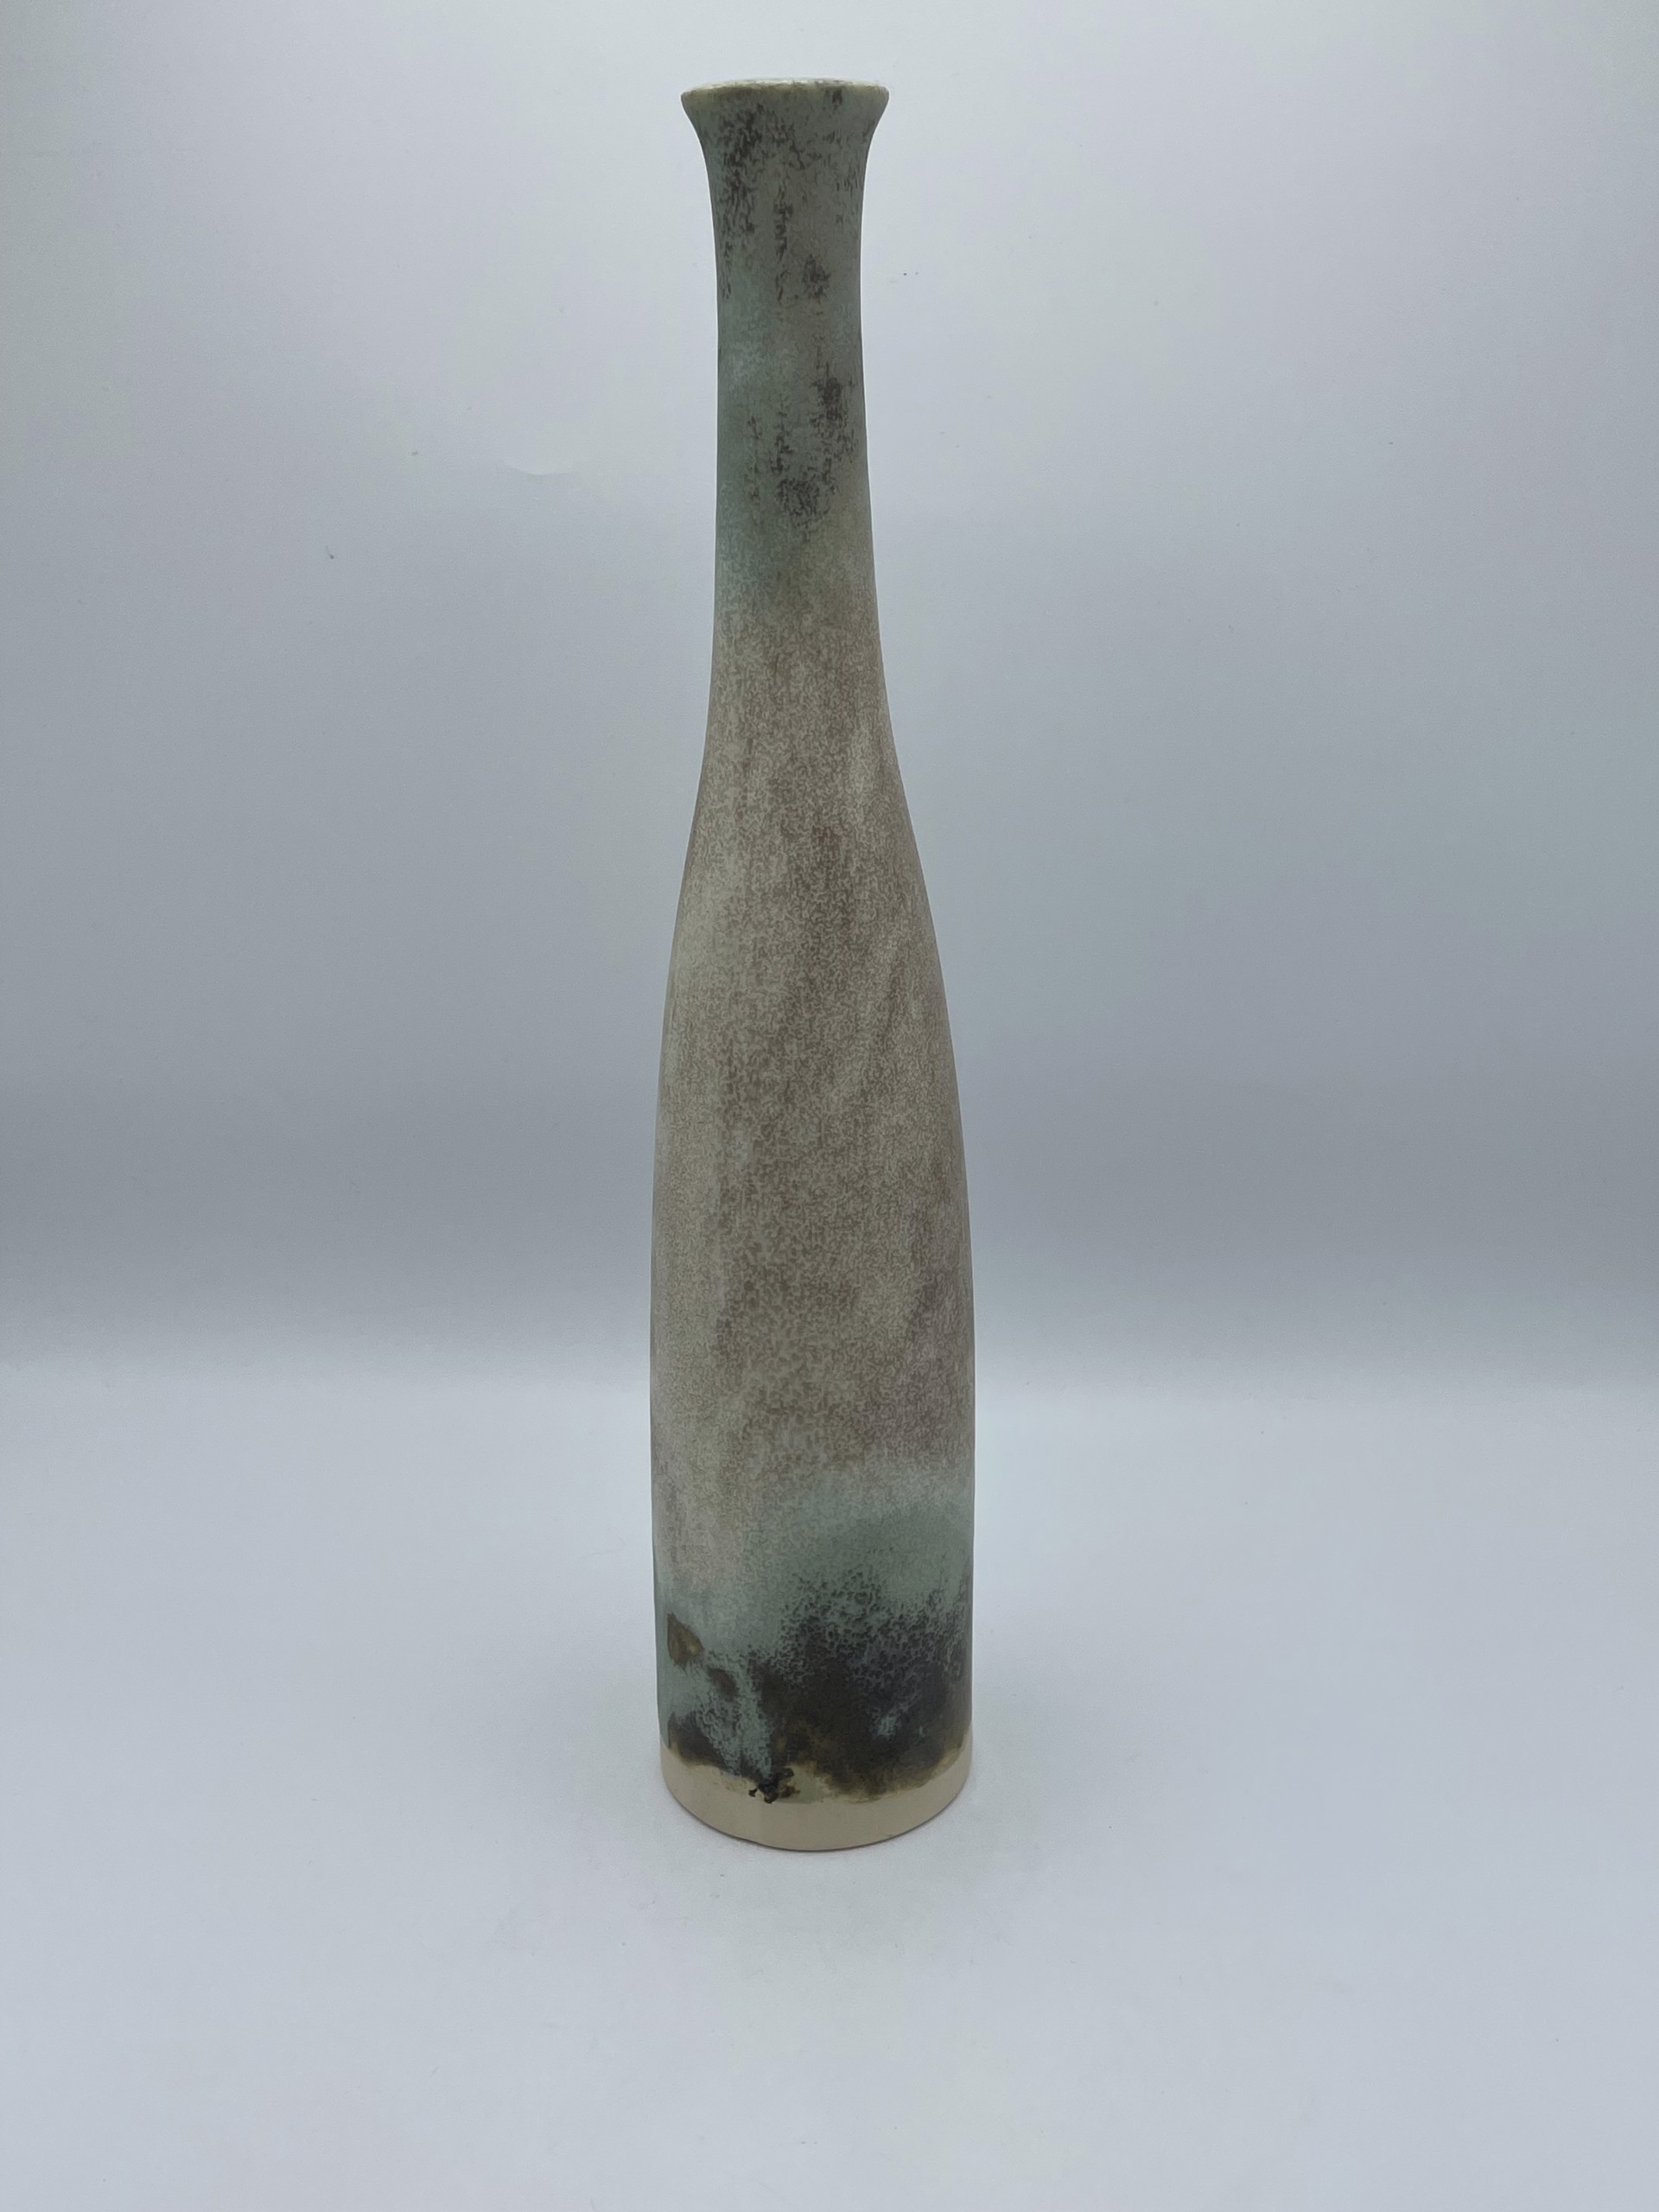 Tall Bottle by Satterfield Pottery